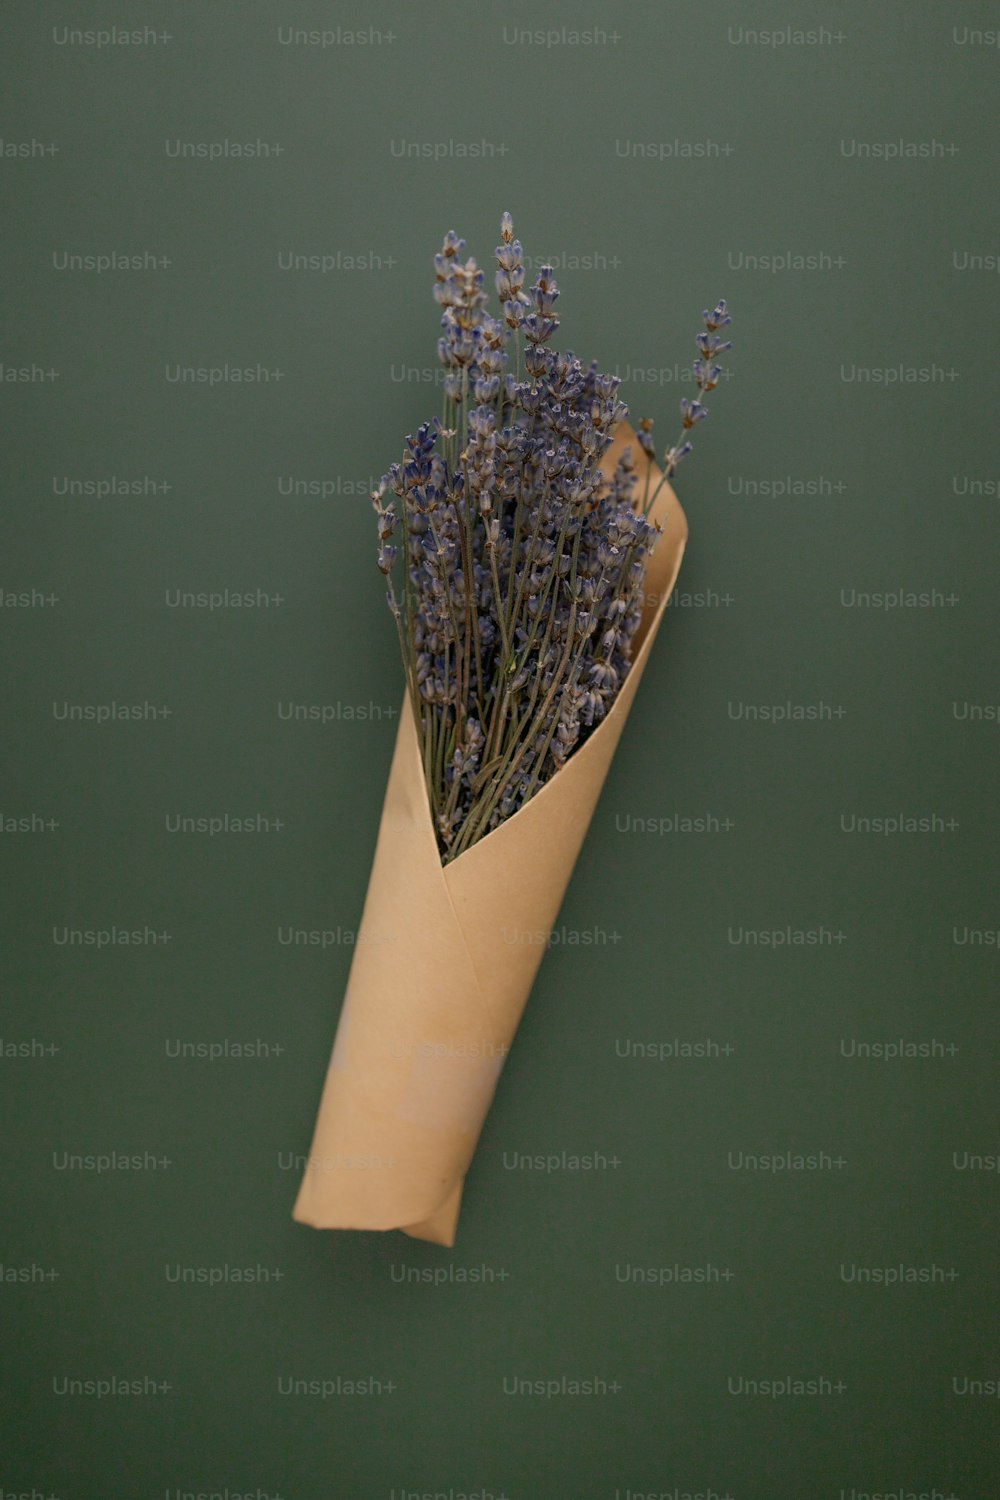 a hand holding a purple flower